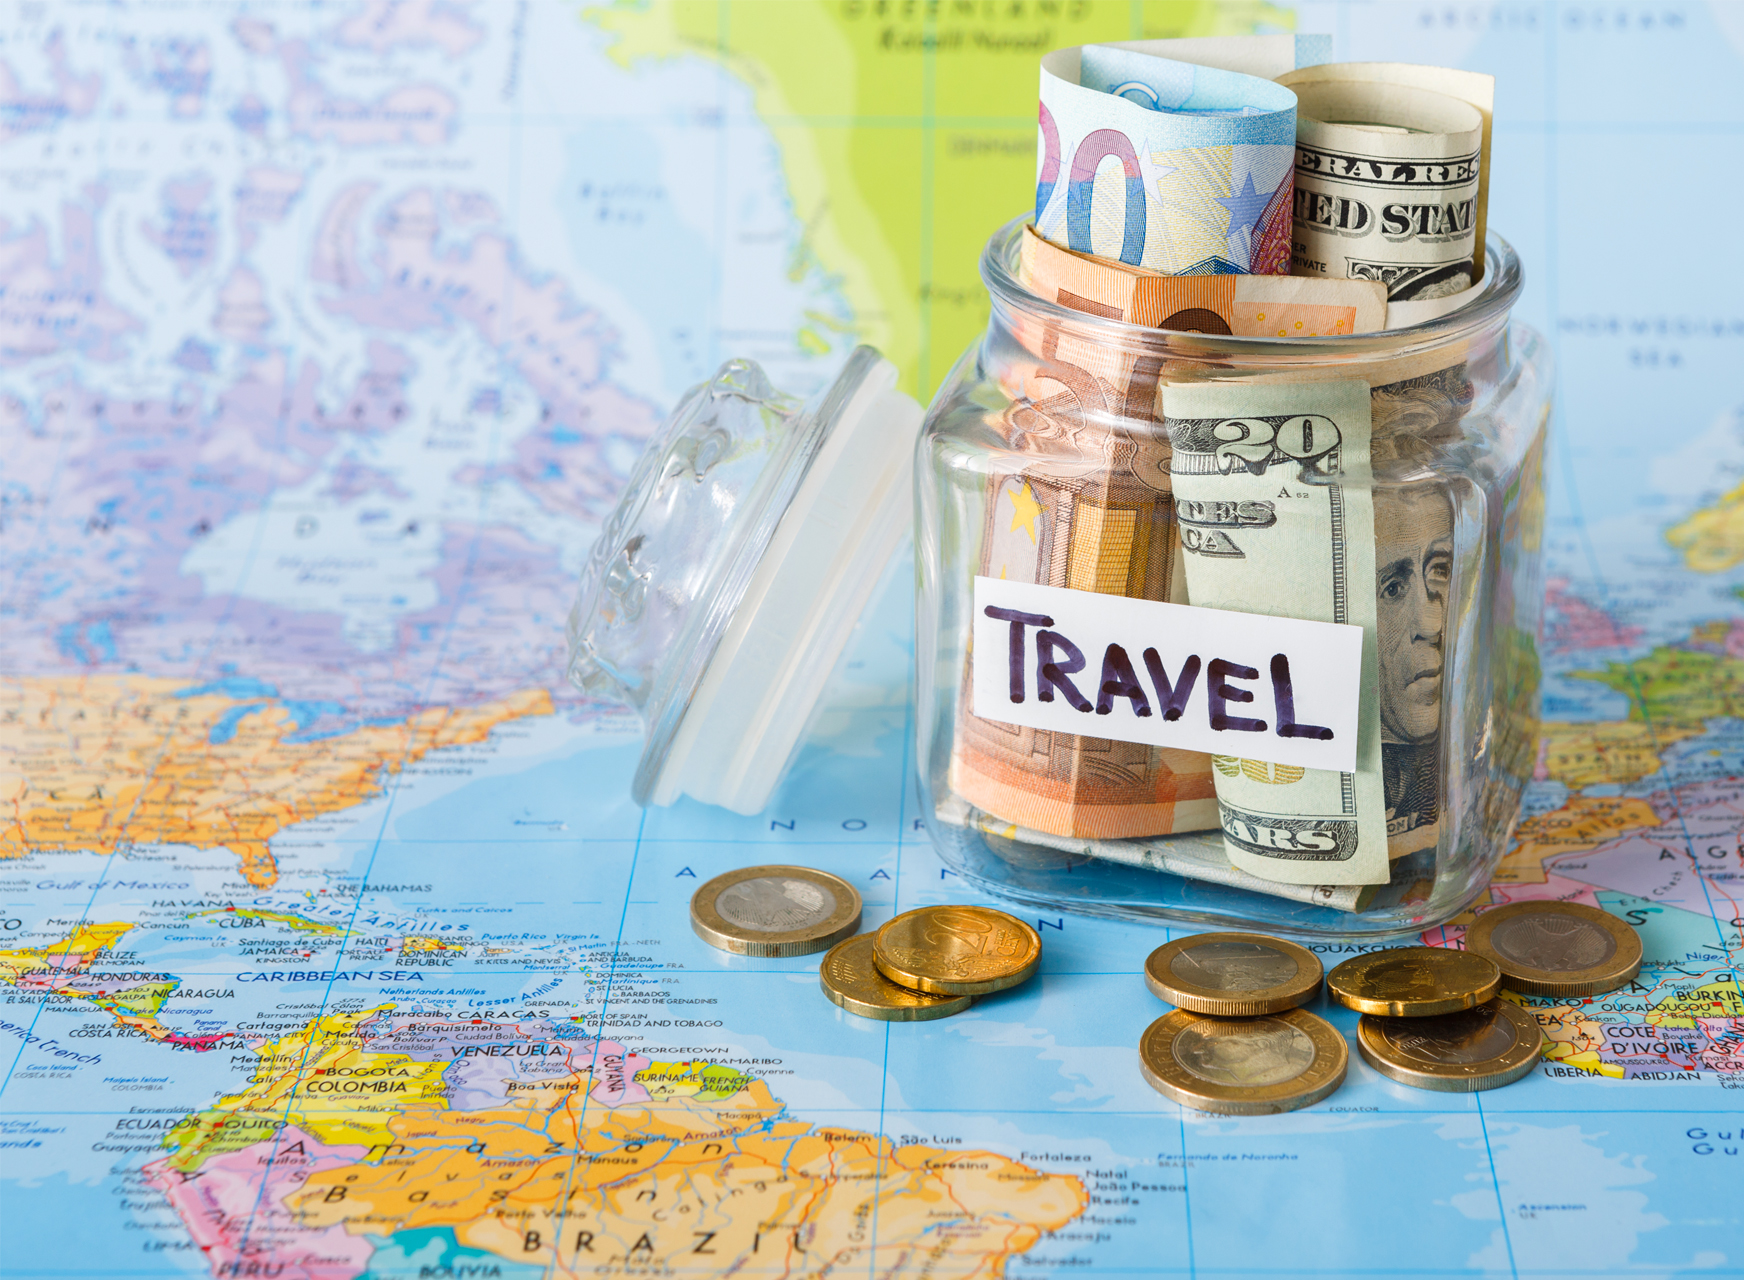 Travelling is expensive. Деньги и путешествия. Экономия на путешествиях. Туризм деньги. Бюджет путешествия.